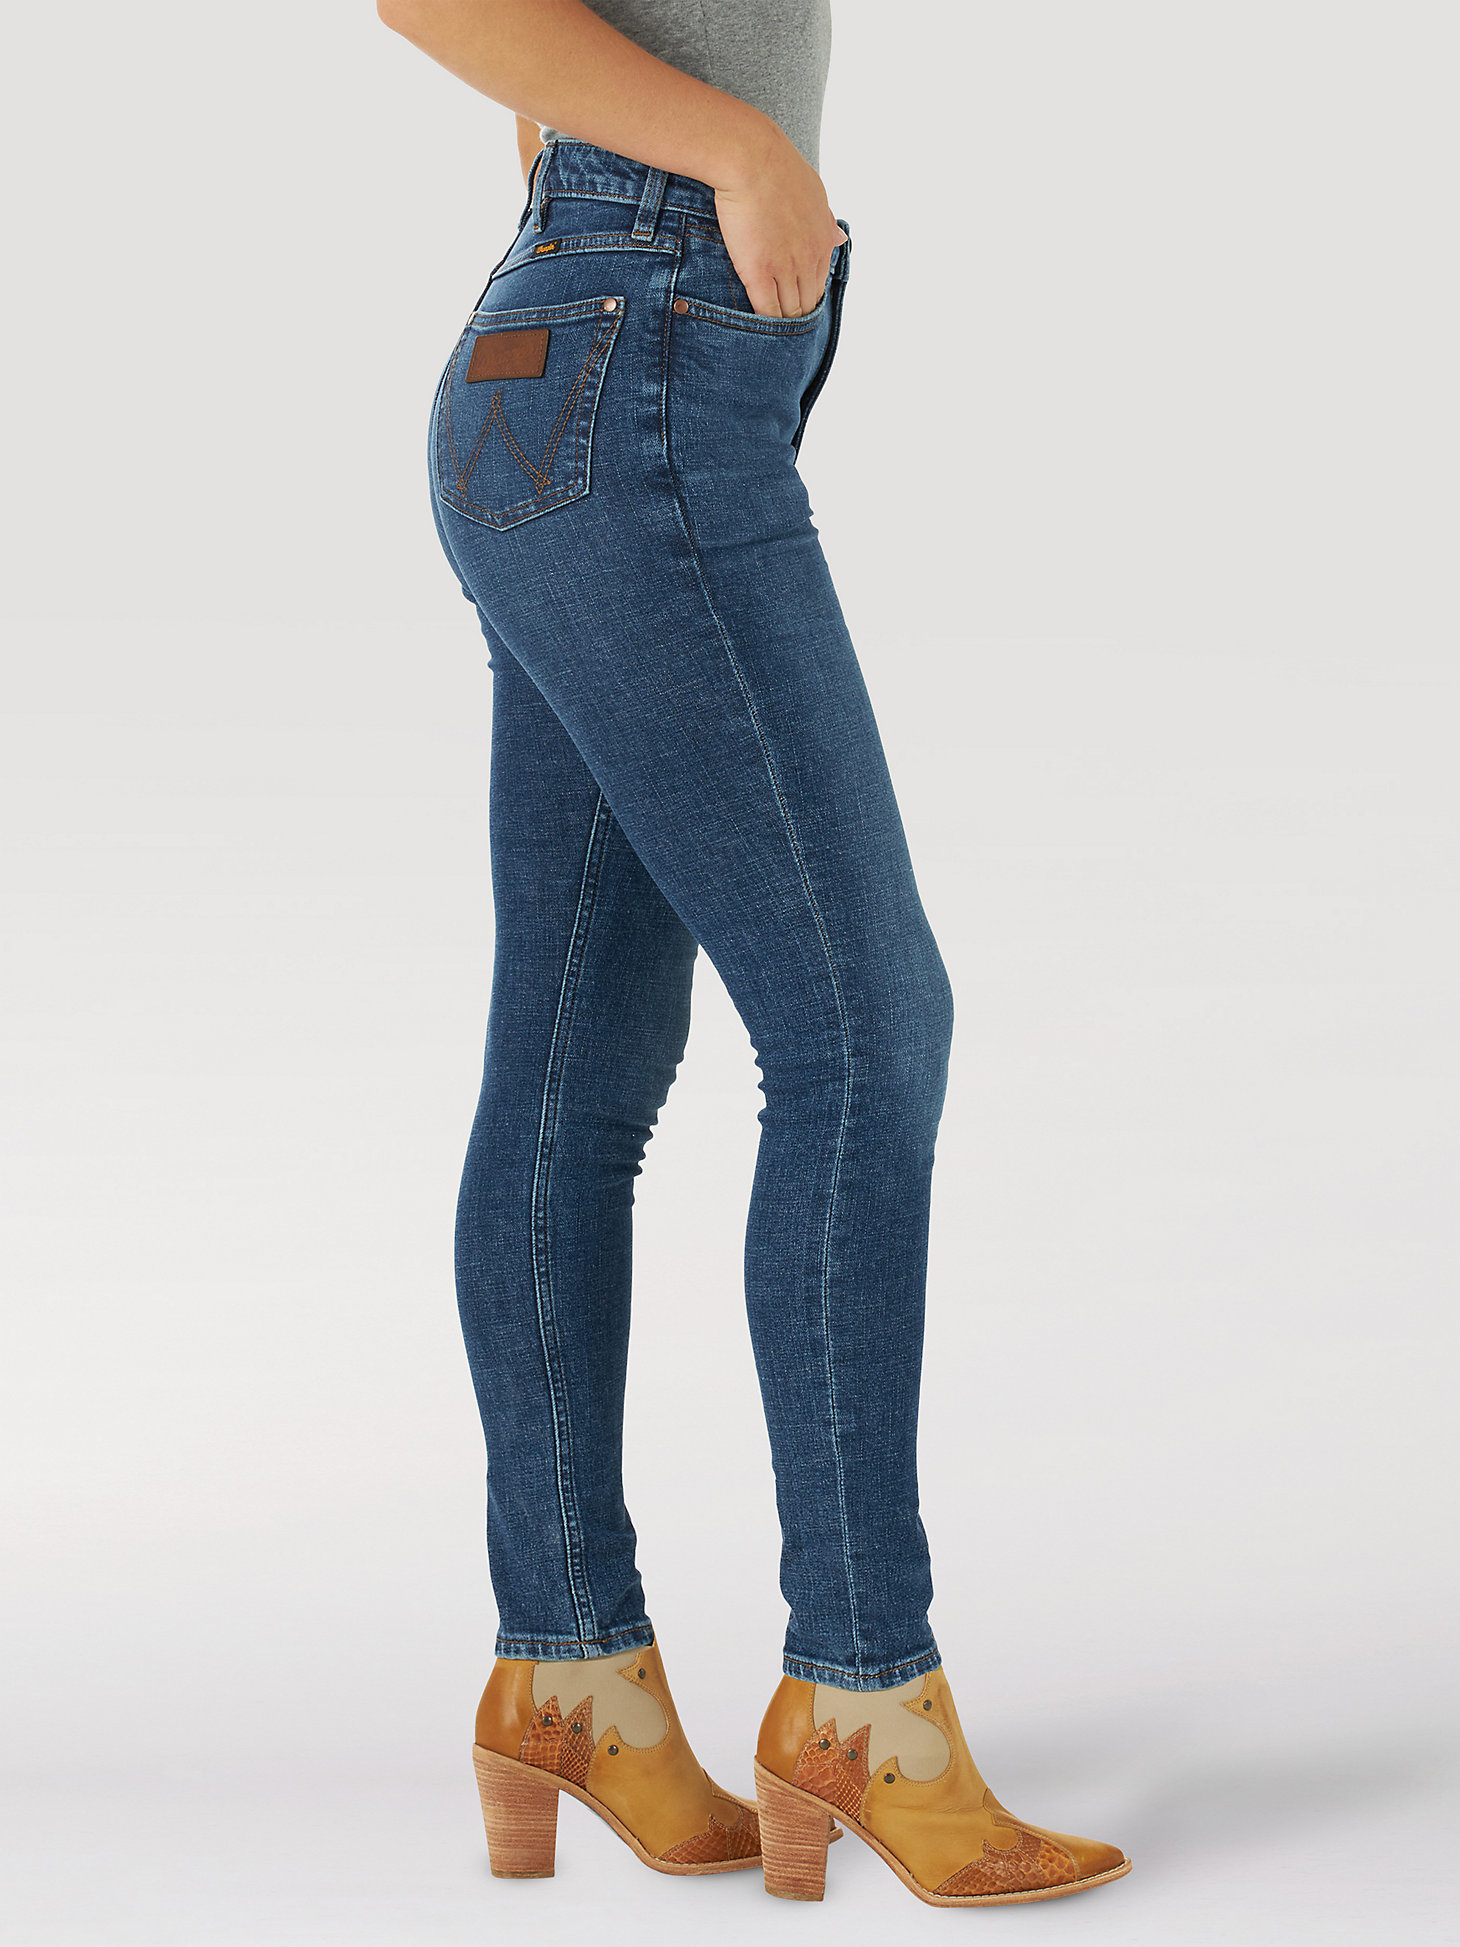 Wrangler Retro® Green Jean: Women's High Rise Skinny in Annie alternative view 1